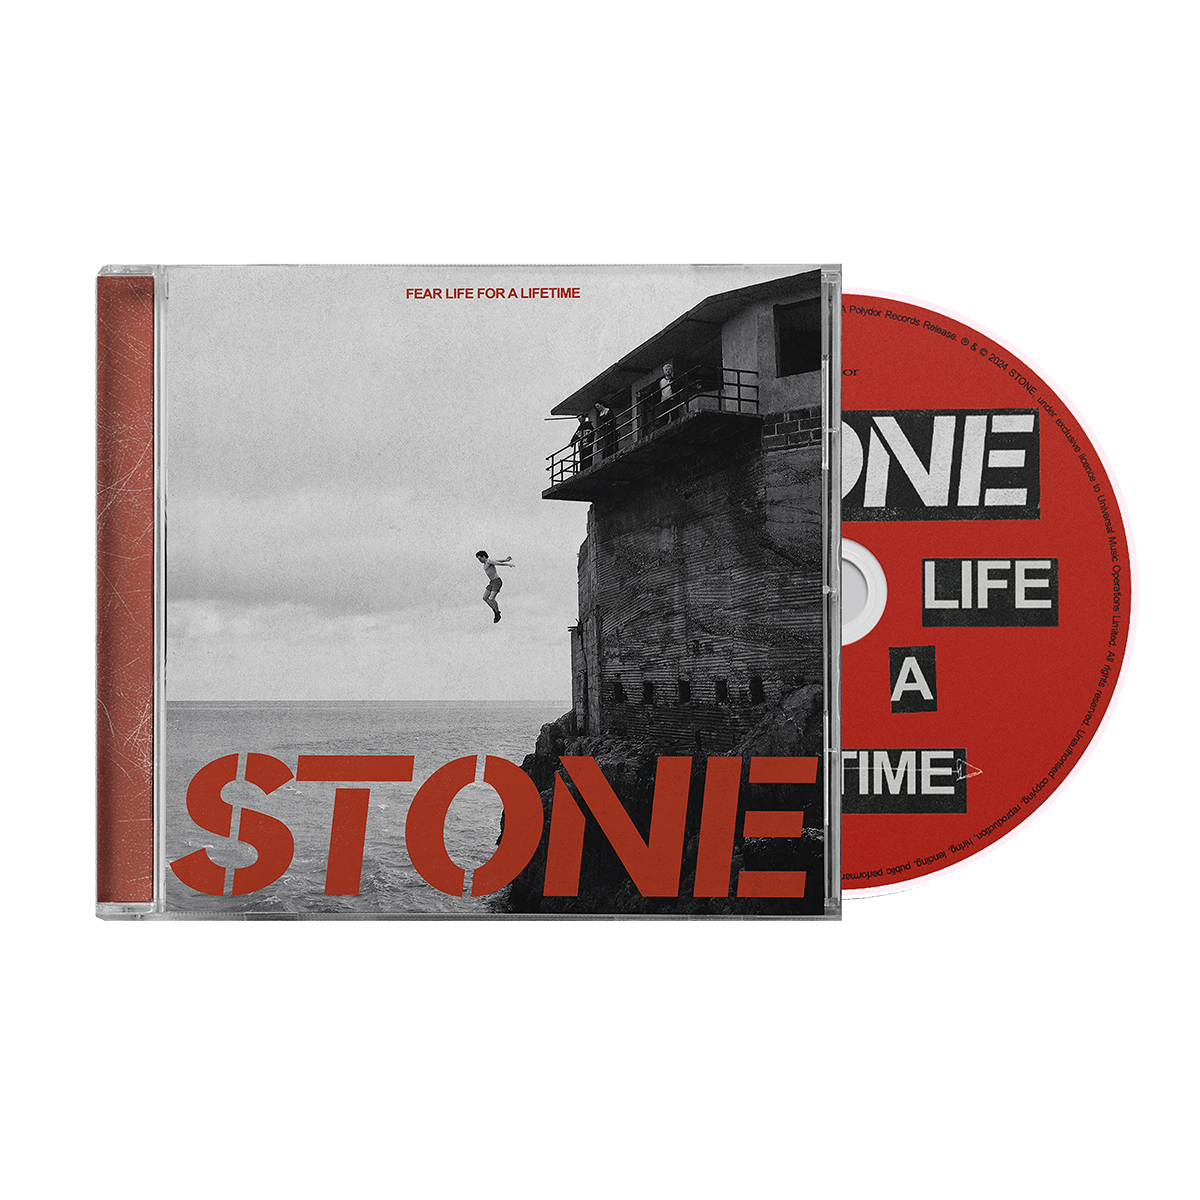 Fear Life For A Lifetime CD, Cassette